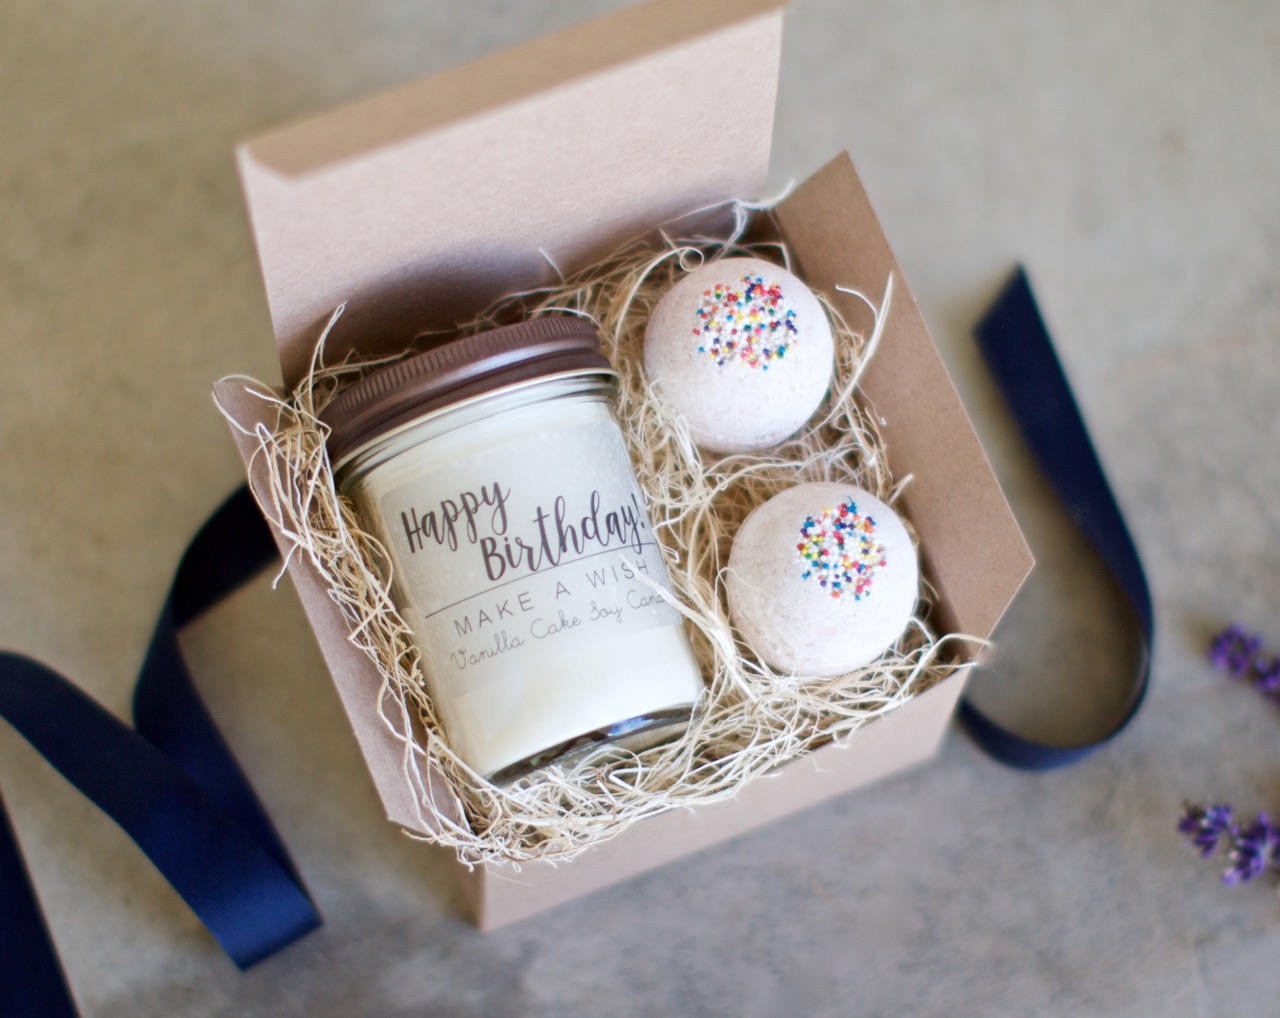 hamper gift set for her Birthday Handmade Wax melt Bath Salt Hot Chocolate Gft 